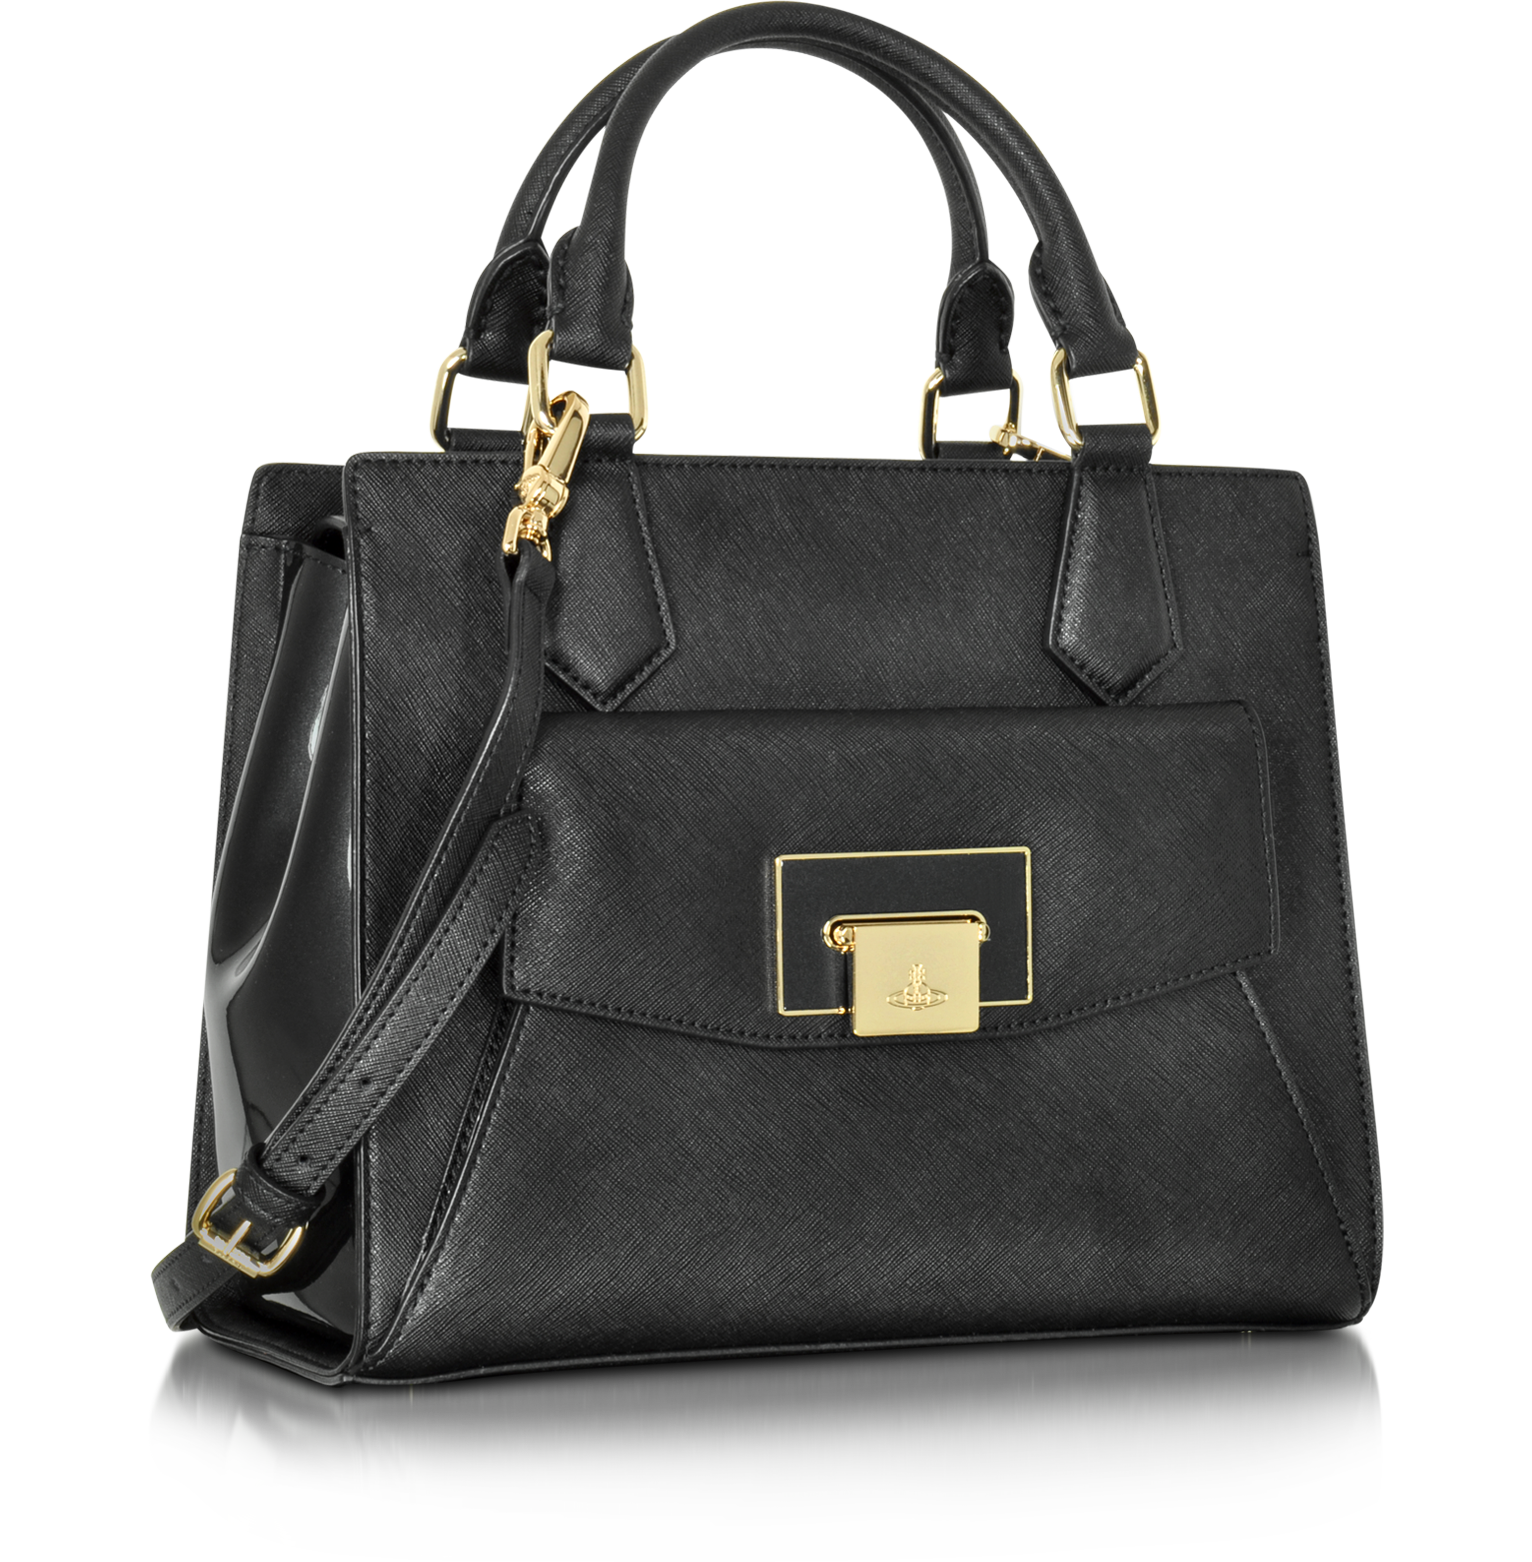 Vivienne Westwood Black Saffiano Leather Opio Satchel Bag at FORZIERI